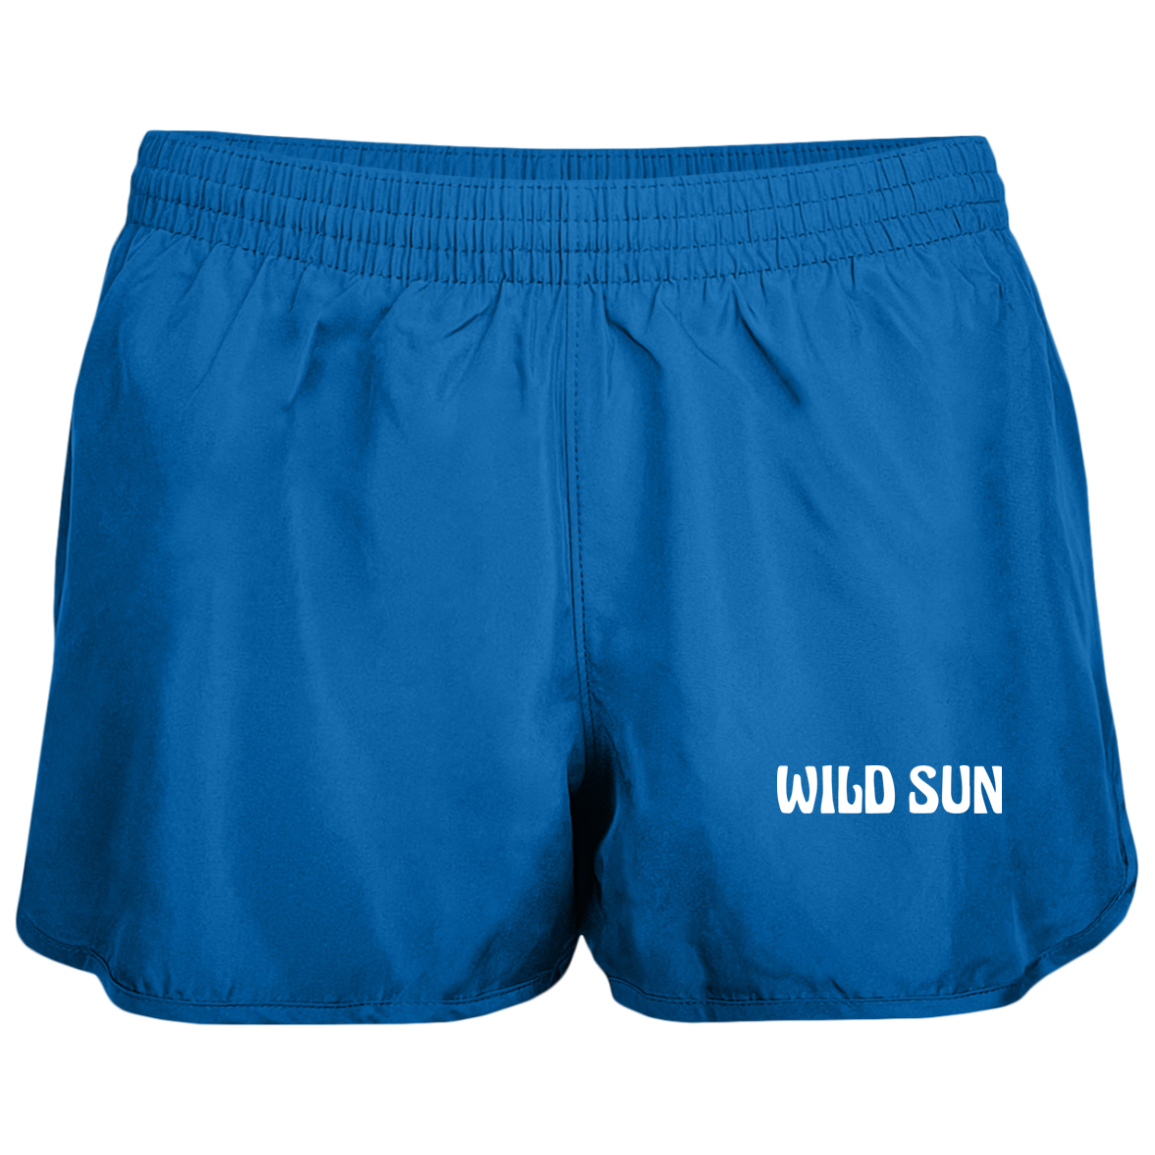 Wild Sun Ladies' Running Shorts